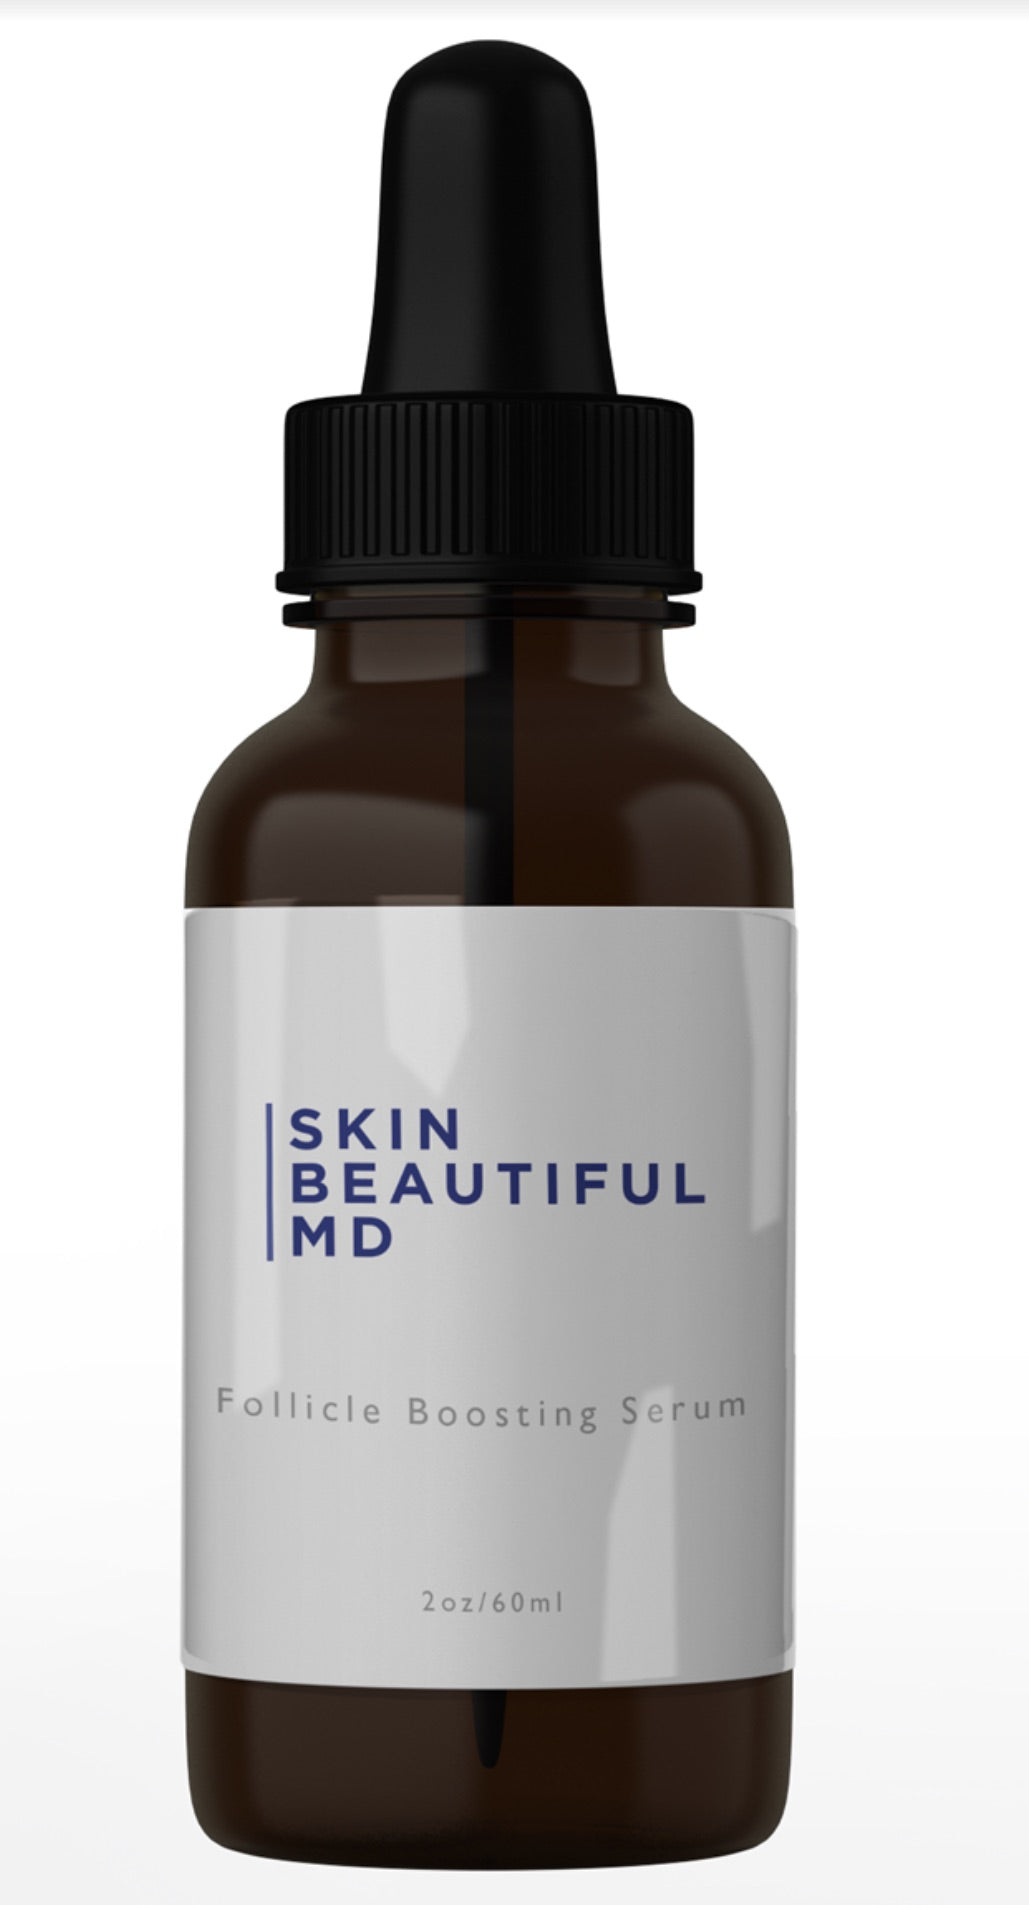 Skin Beautiful MD Follicle Boosting Serum (2oz Bottle)